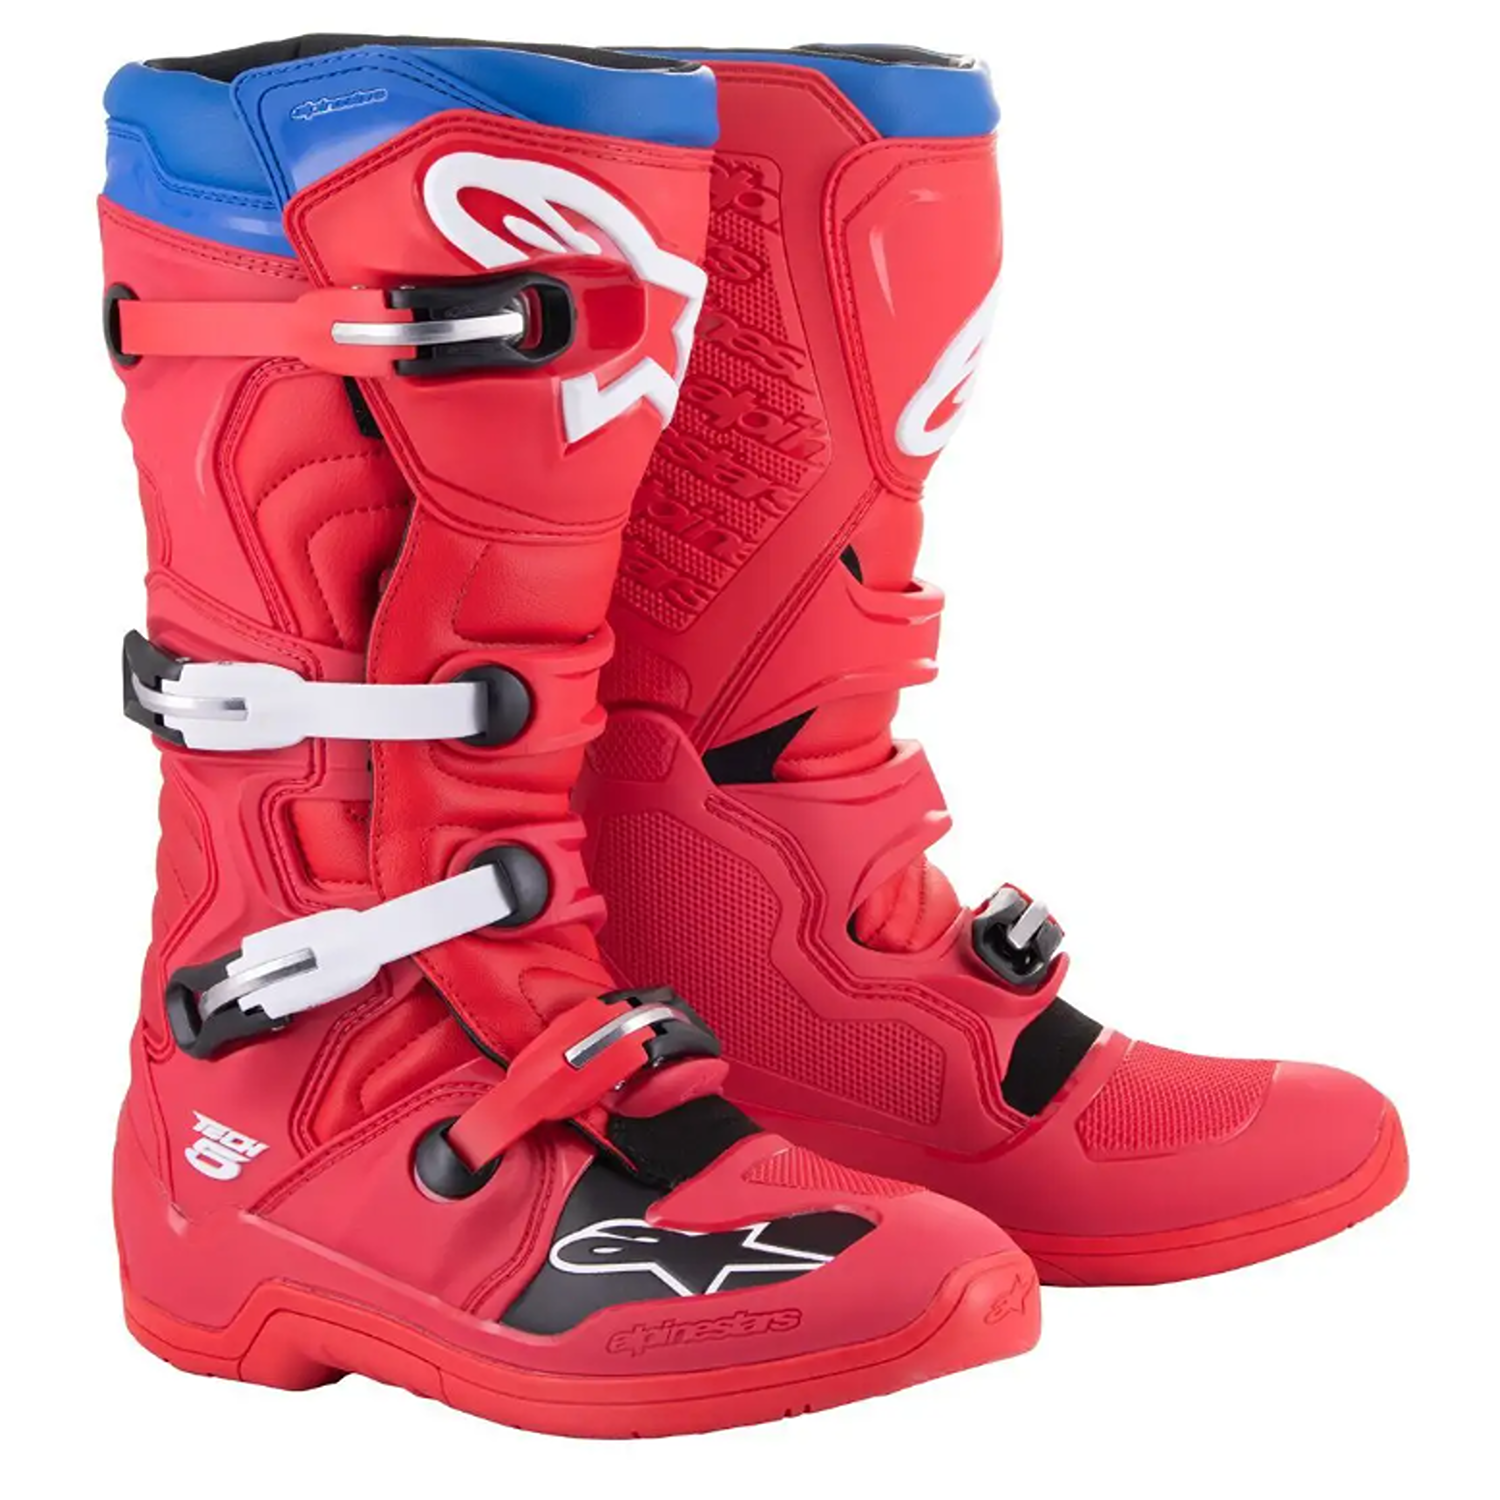 Image of Alpinestars Tech 5 Boots Bright Red Dark Red Blue Size US 11 EN